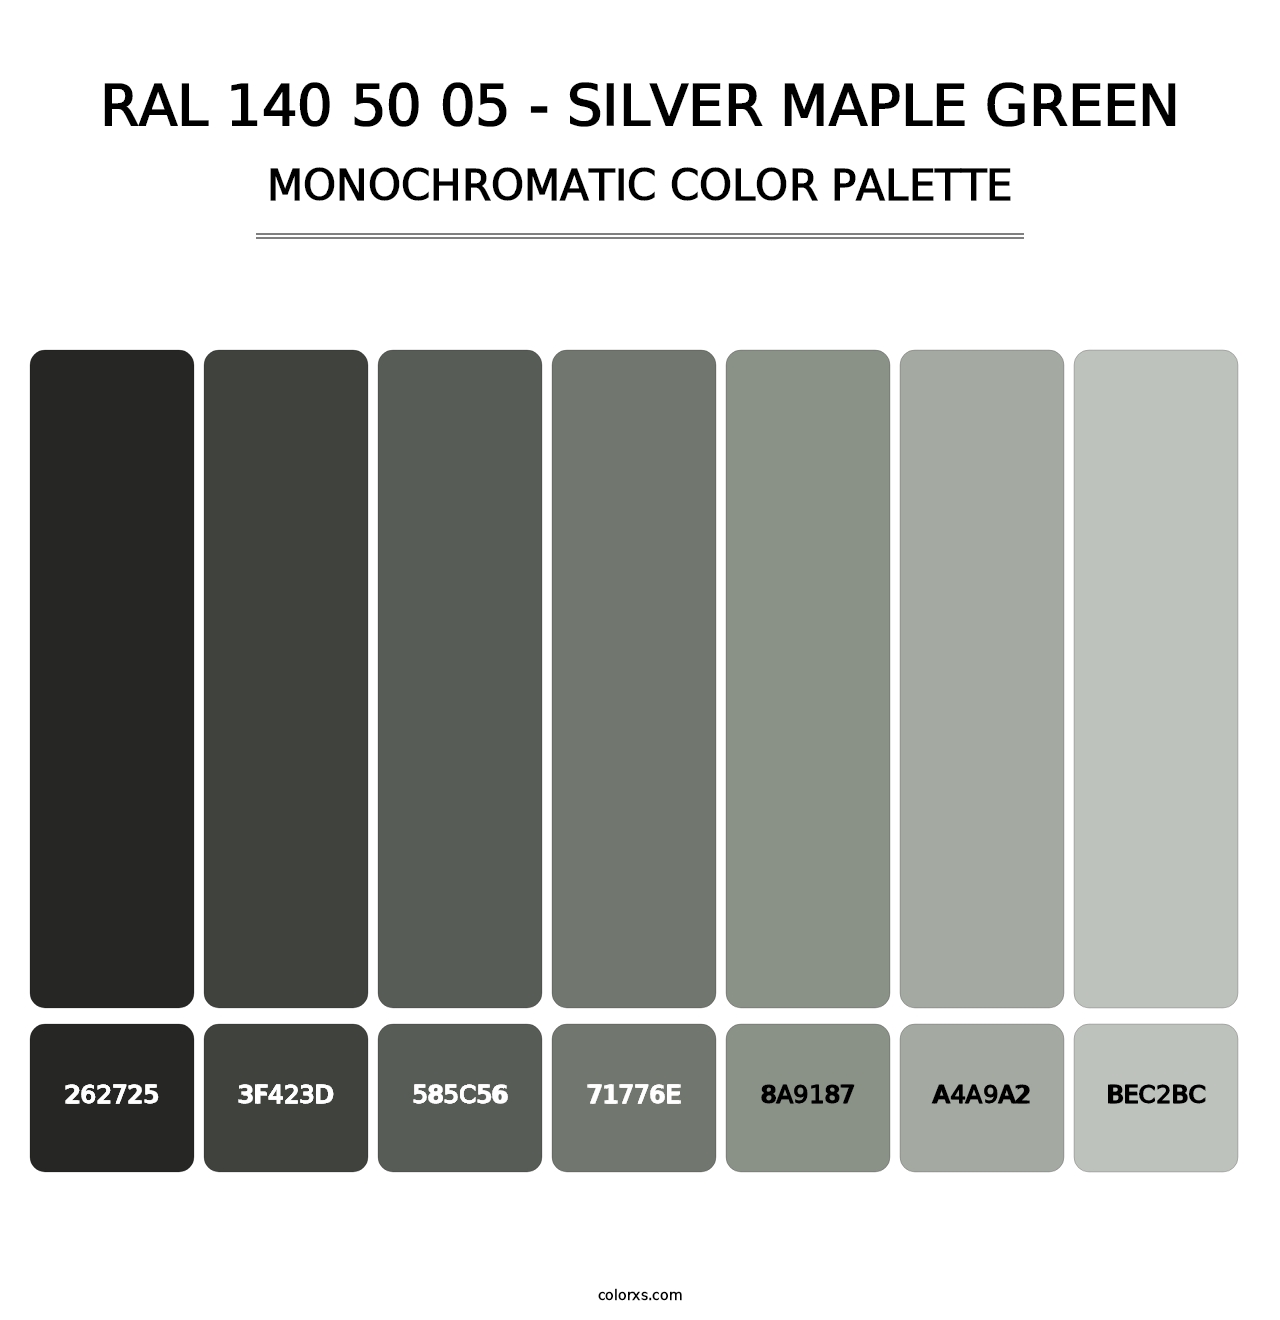 RAL 140 50 05 - Silver Maple Green - Monochromatic Color Palette